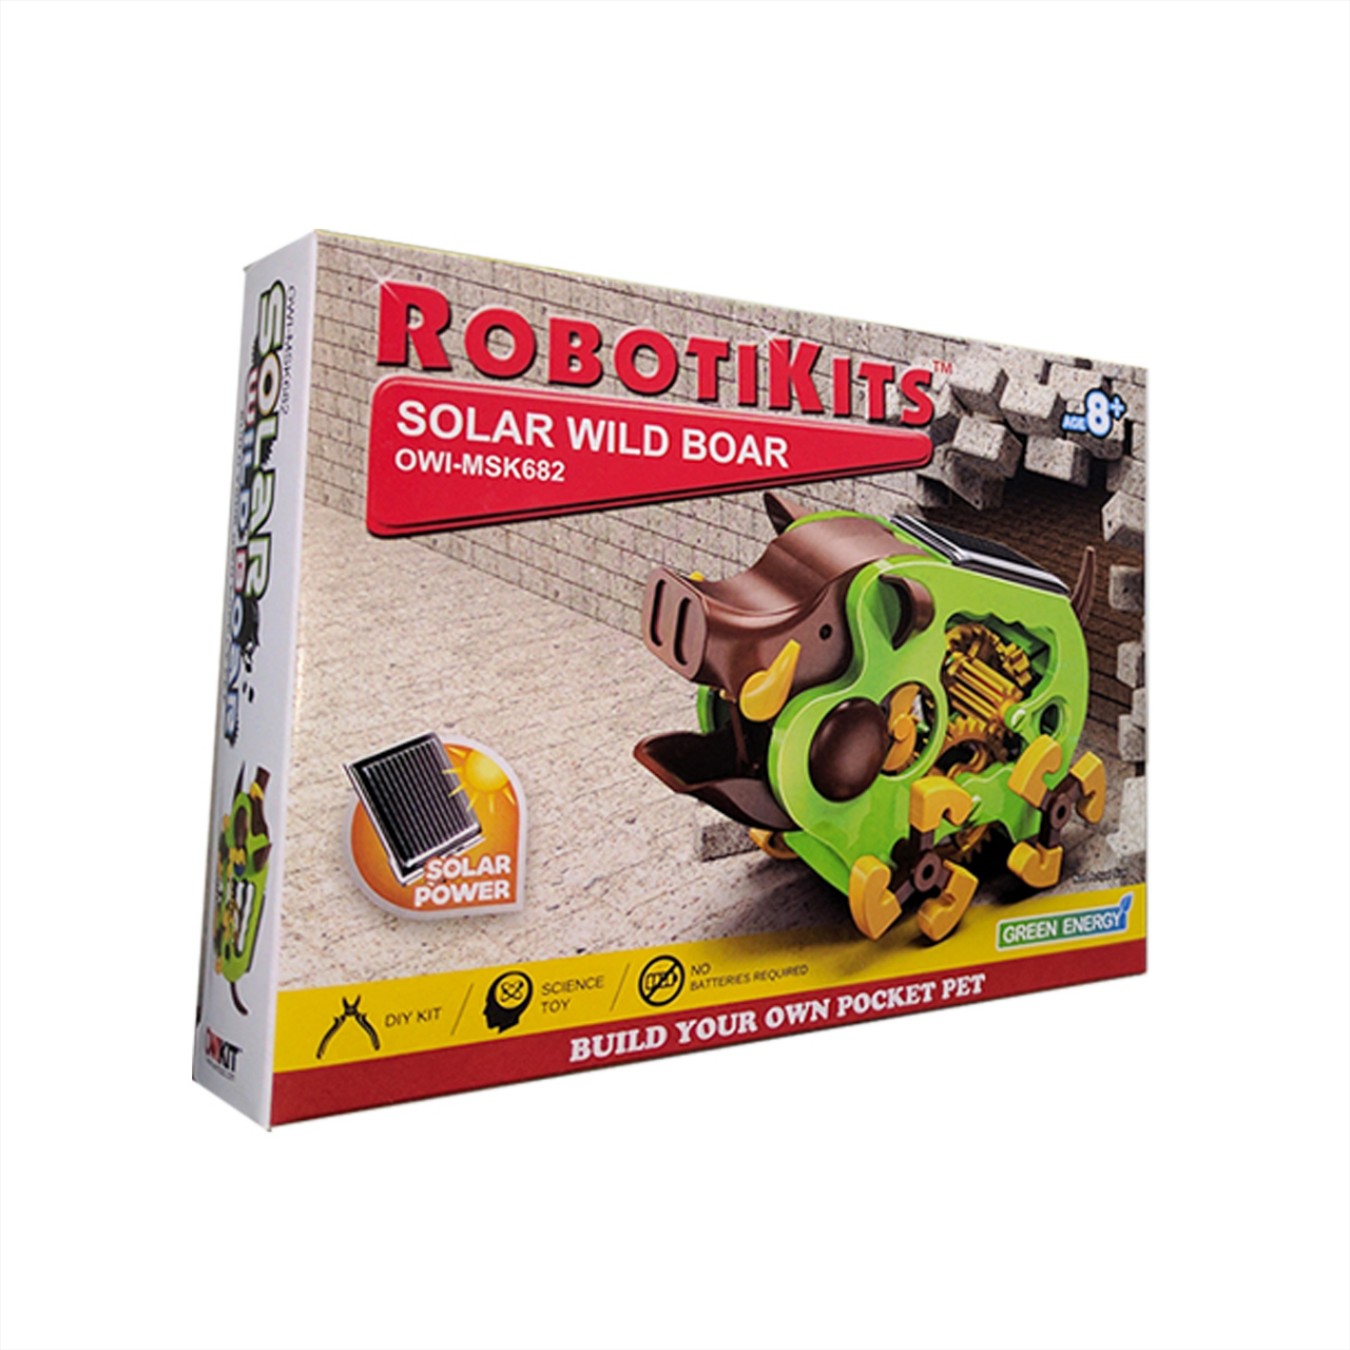 Robotikits: Solar Wild Boar